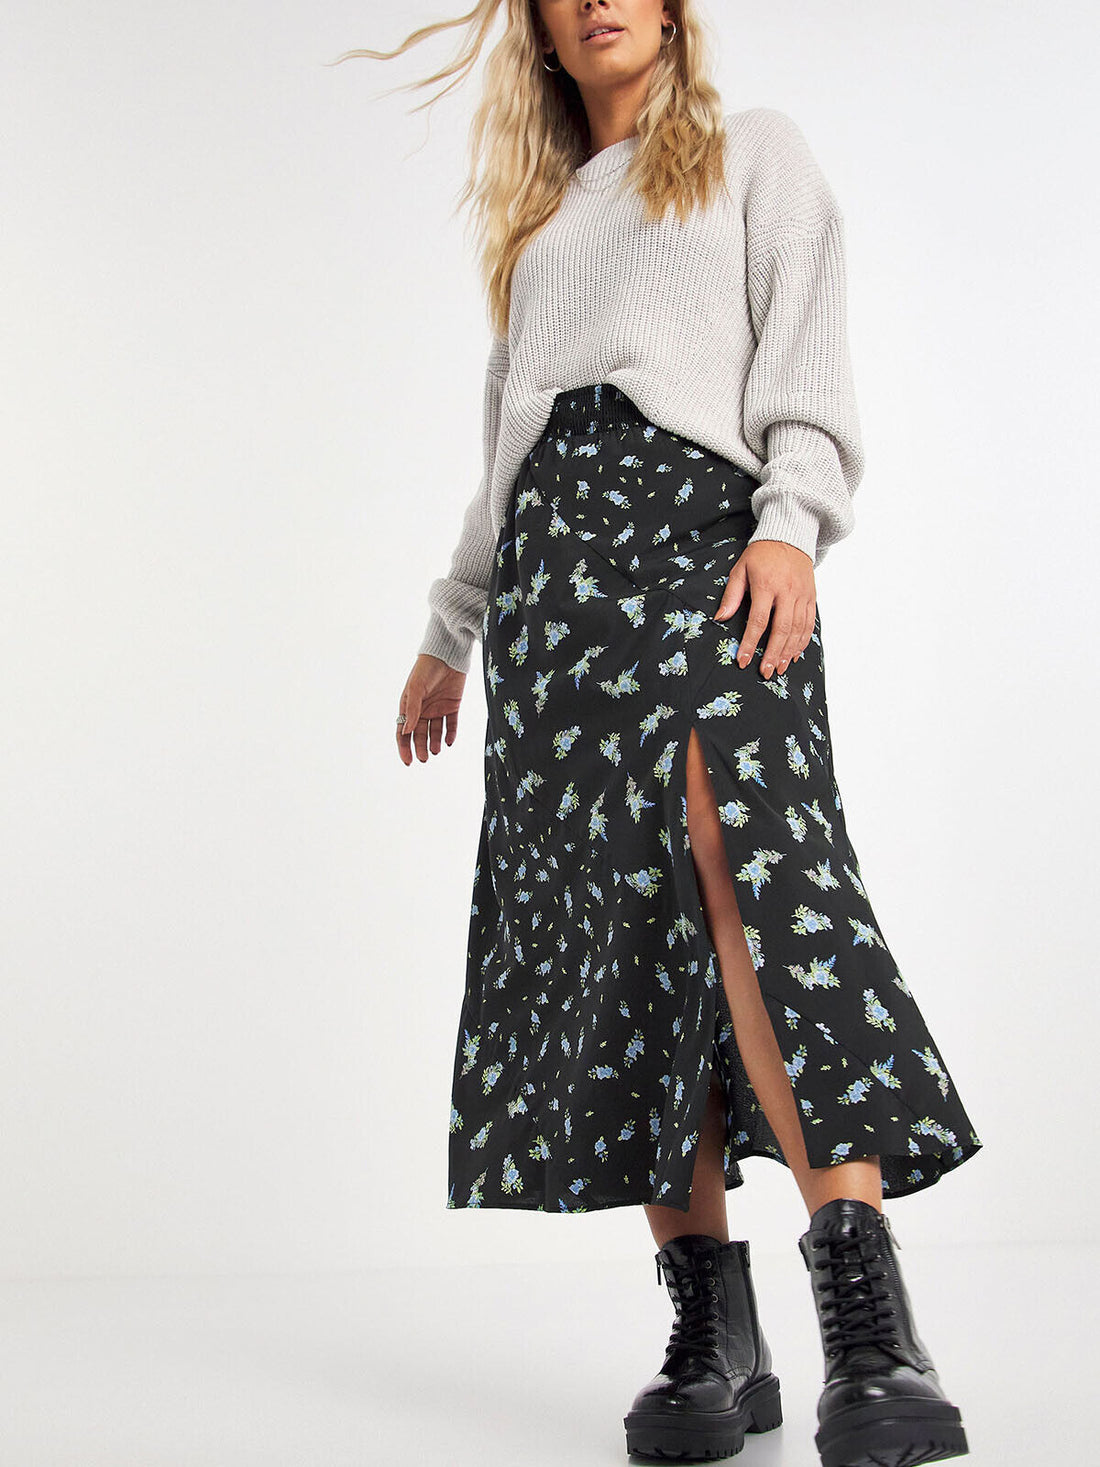 Simply Be Black Mixed Print Asymmetric Skirt in Sizes 18, 20, 24